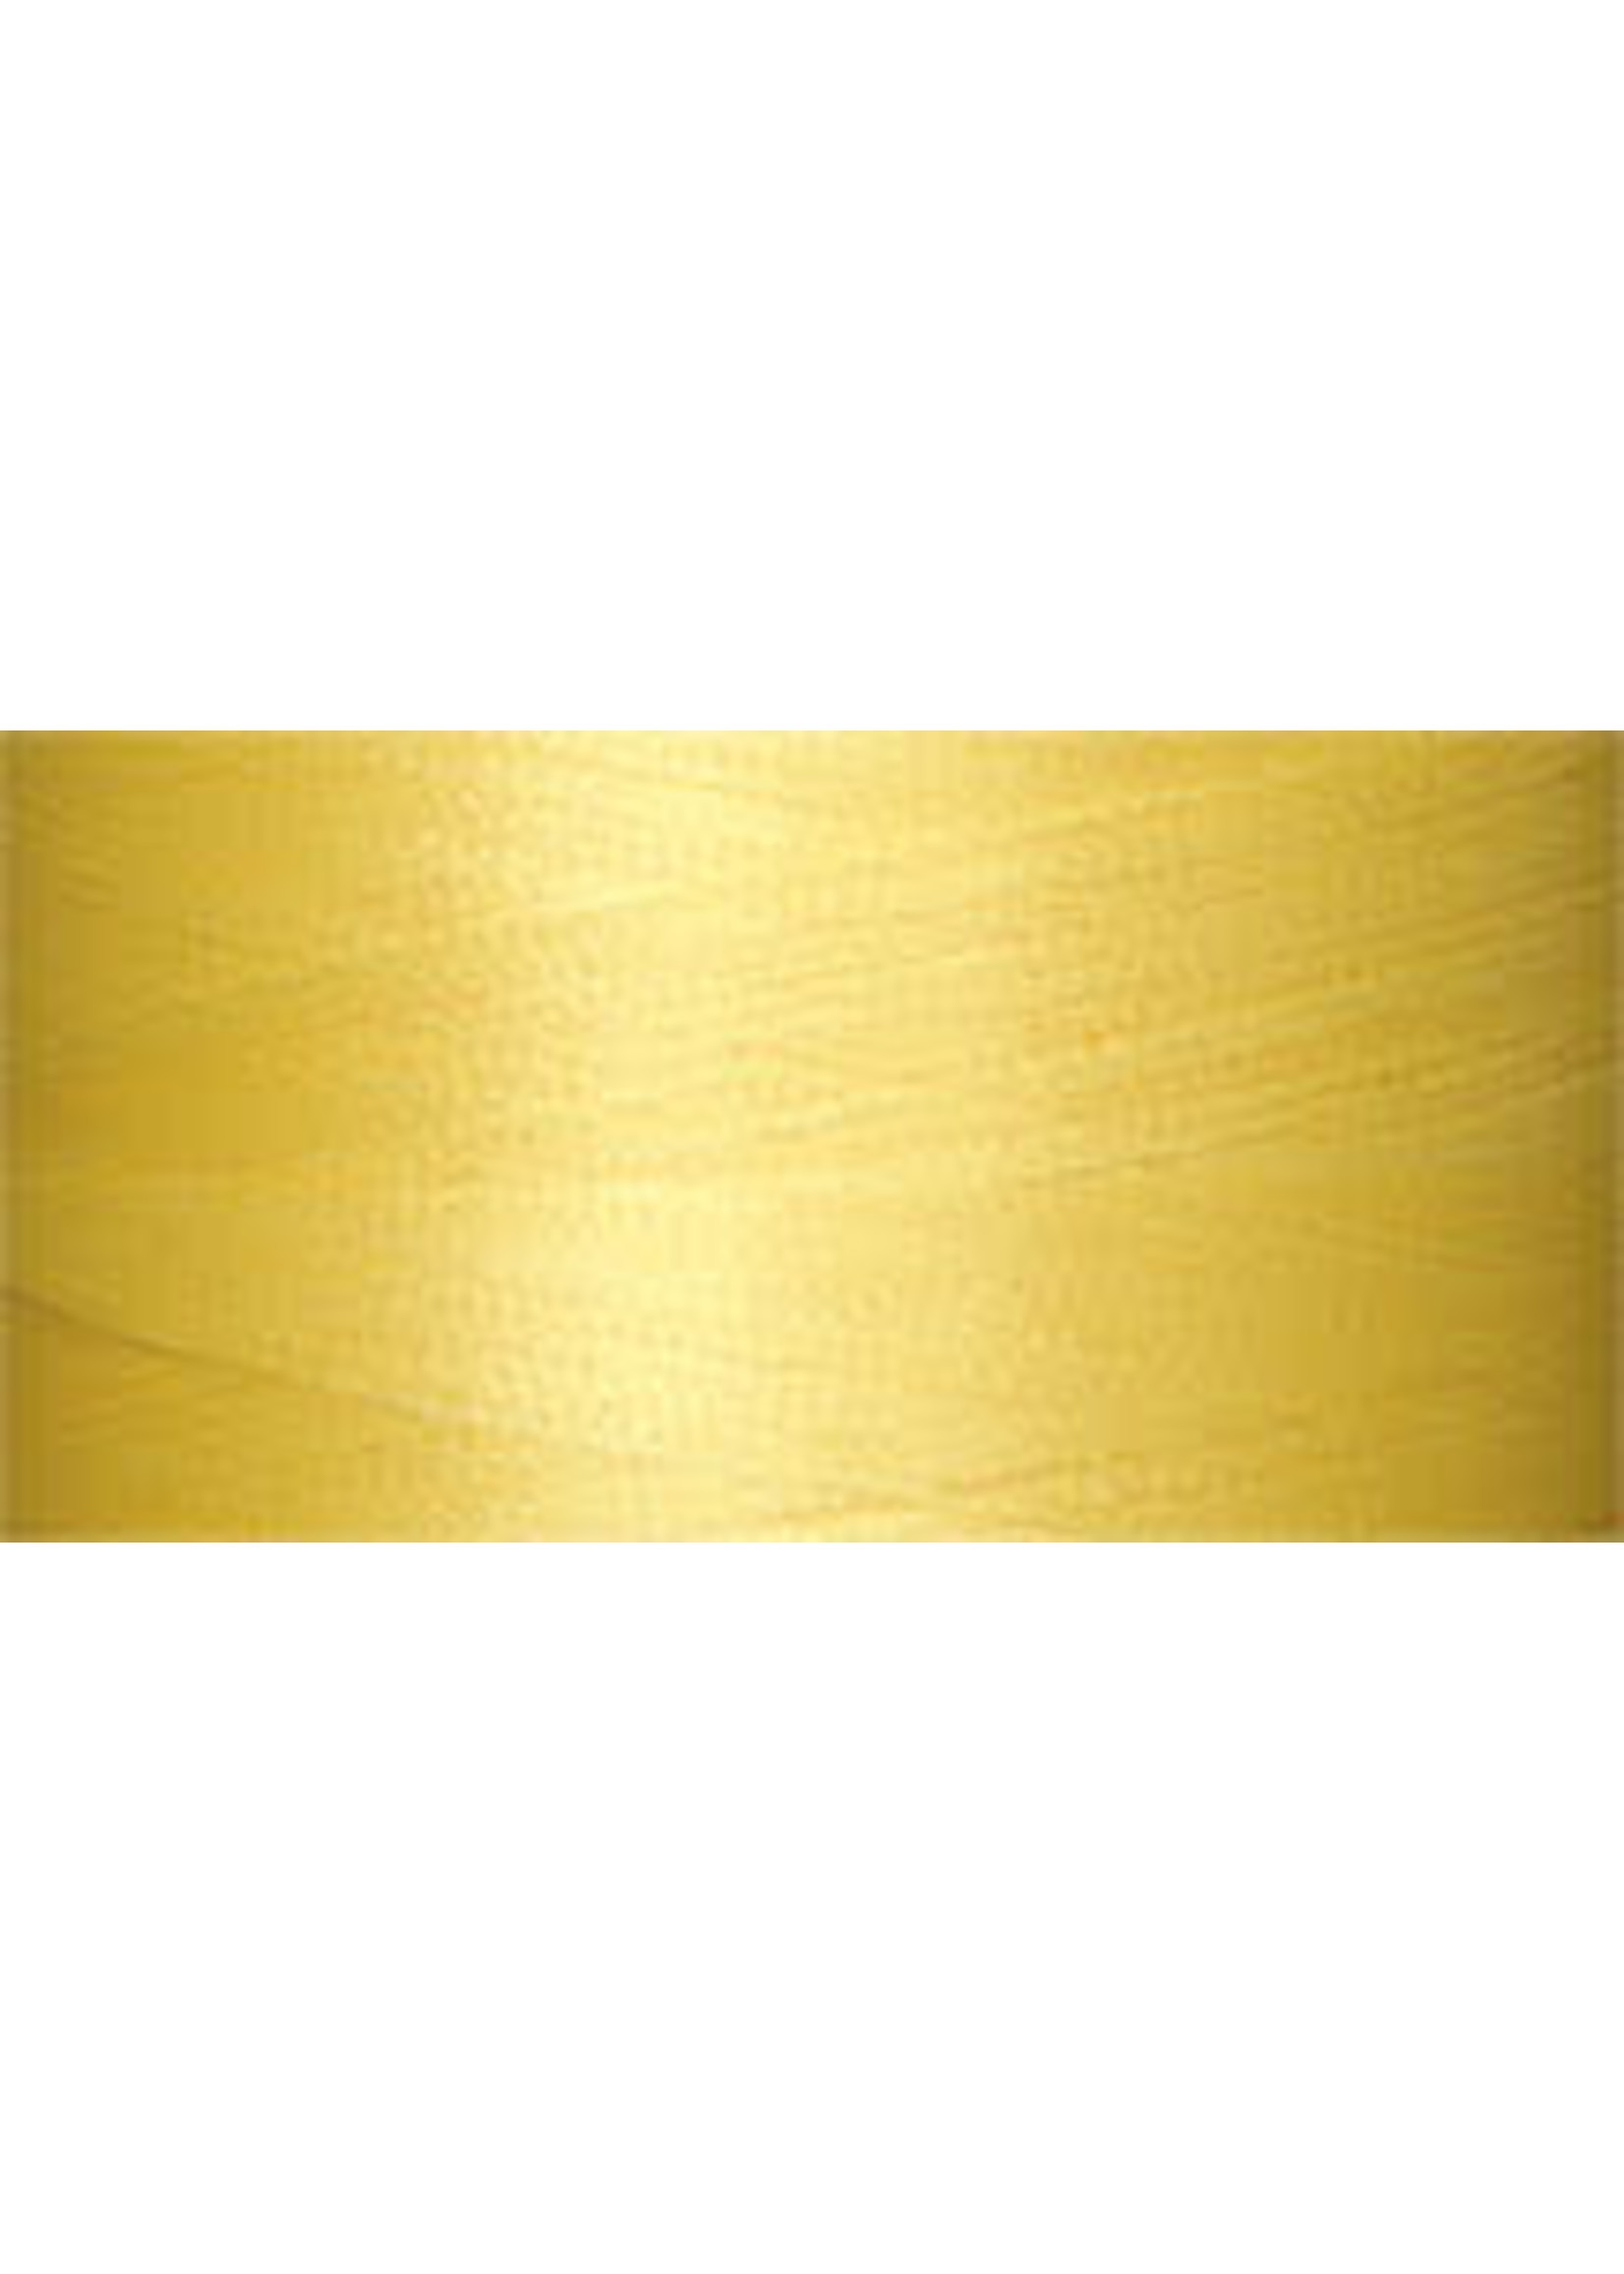 Superior Threads Bottom Line - #60 - 1300 m - 601 Yellow